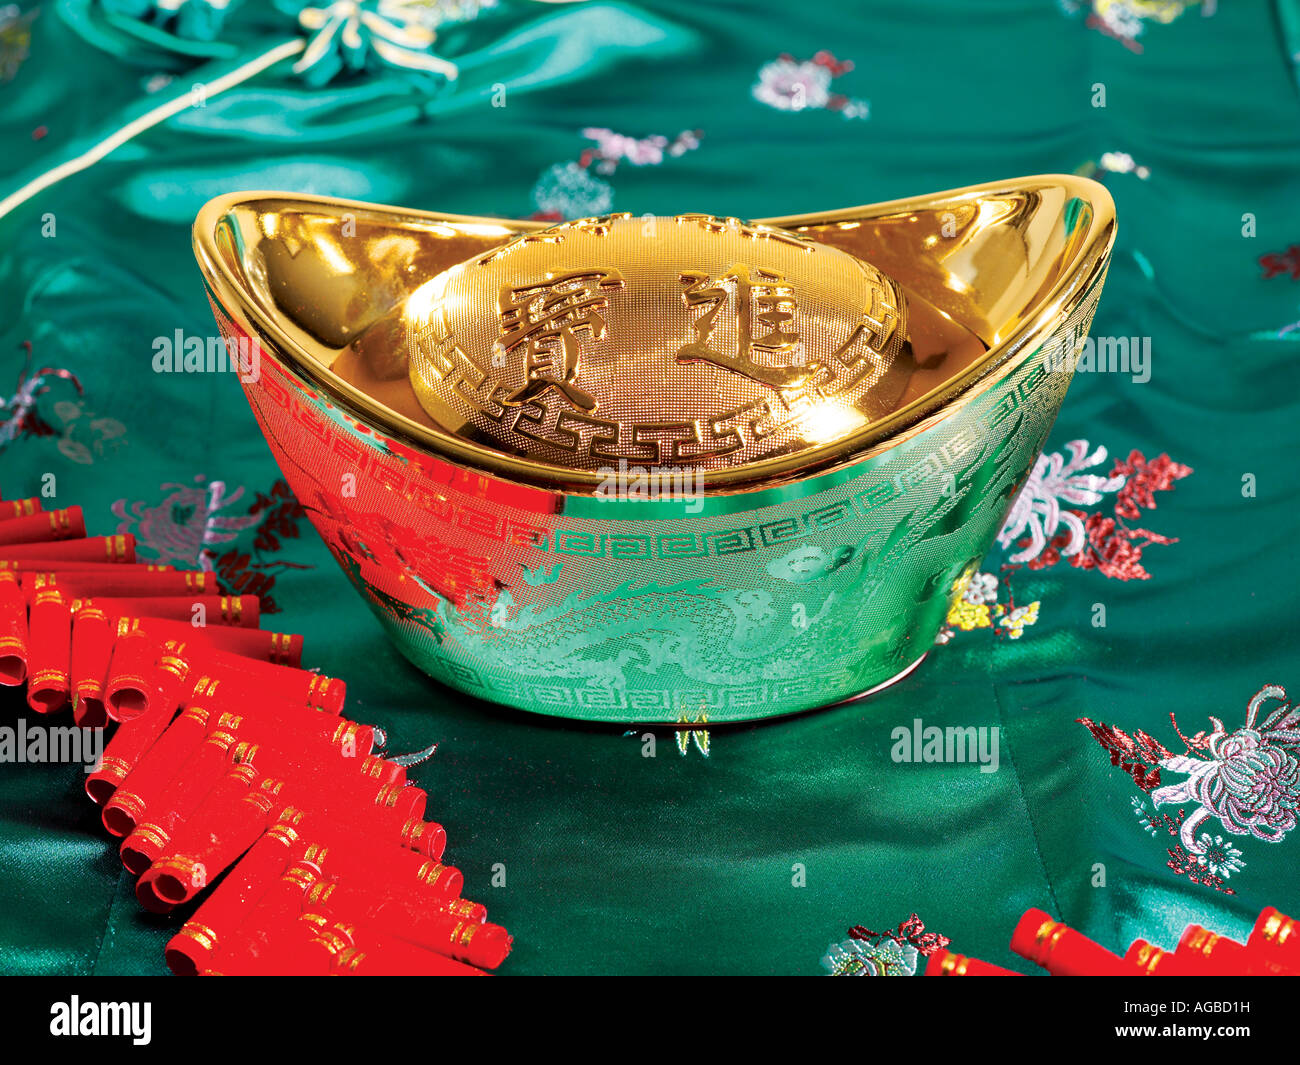 Gold ingot, Chinese New Year Ornament, Close up Stock Photo